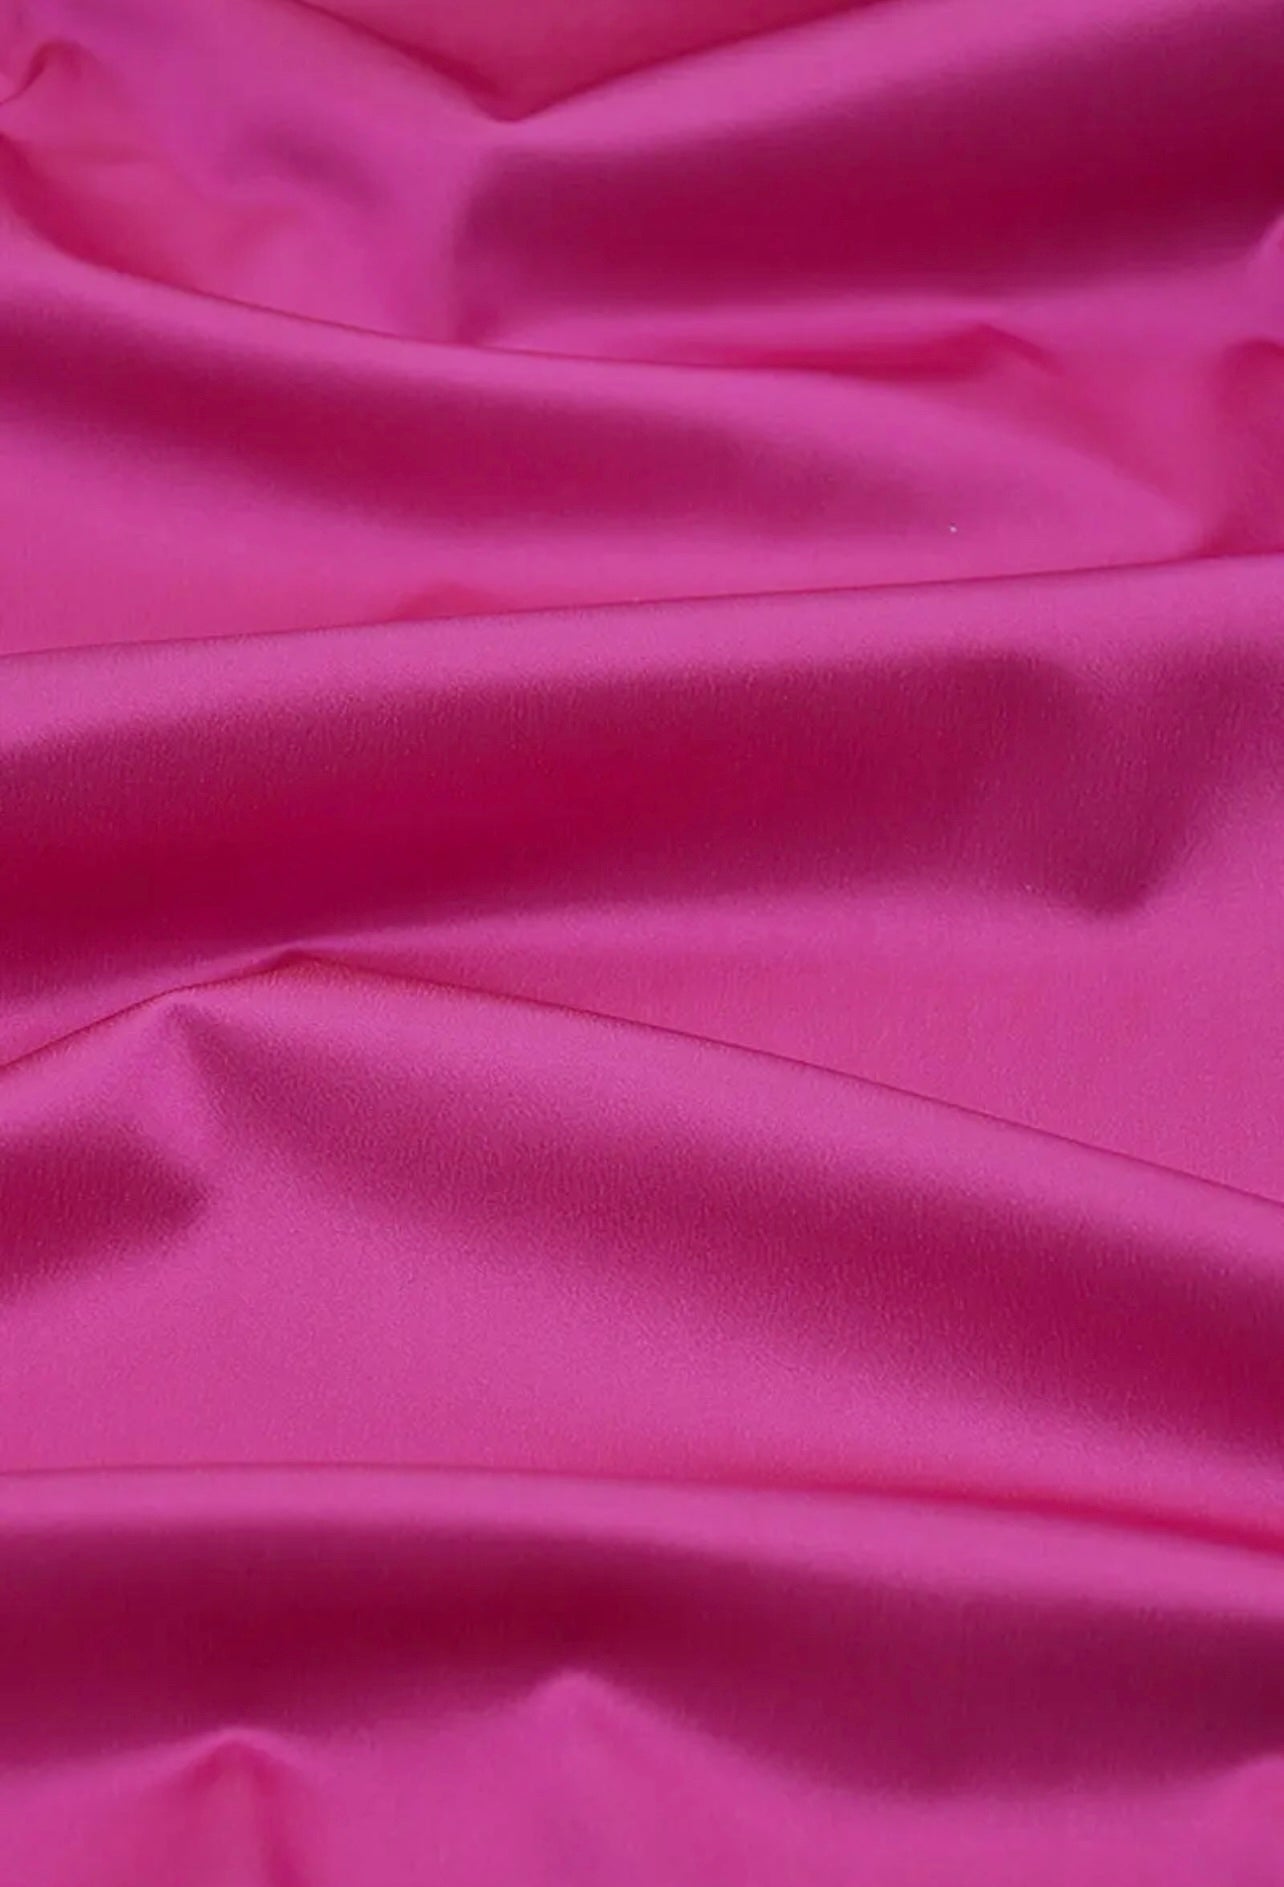 Hot Pink Duchesse Satin Fabric, Hot Pink Bridal Shiny Satin by yard, Fuchsia Heavy Satin Fabric for Wedding Dress, pink satin gown, satin for woman, discounted satin, buy satin online, premium satin, cheap satin, best quality satin, luxury satin